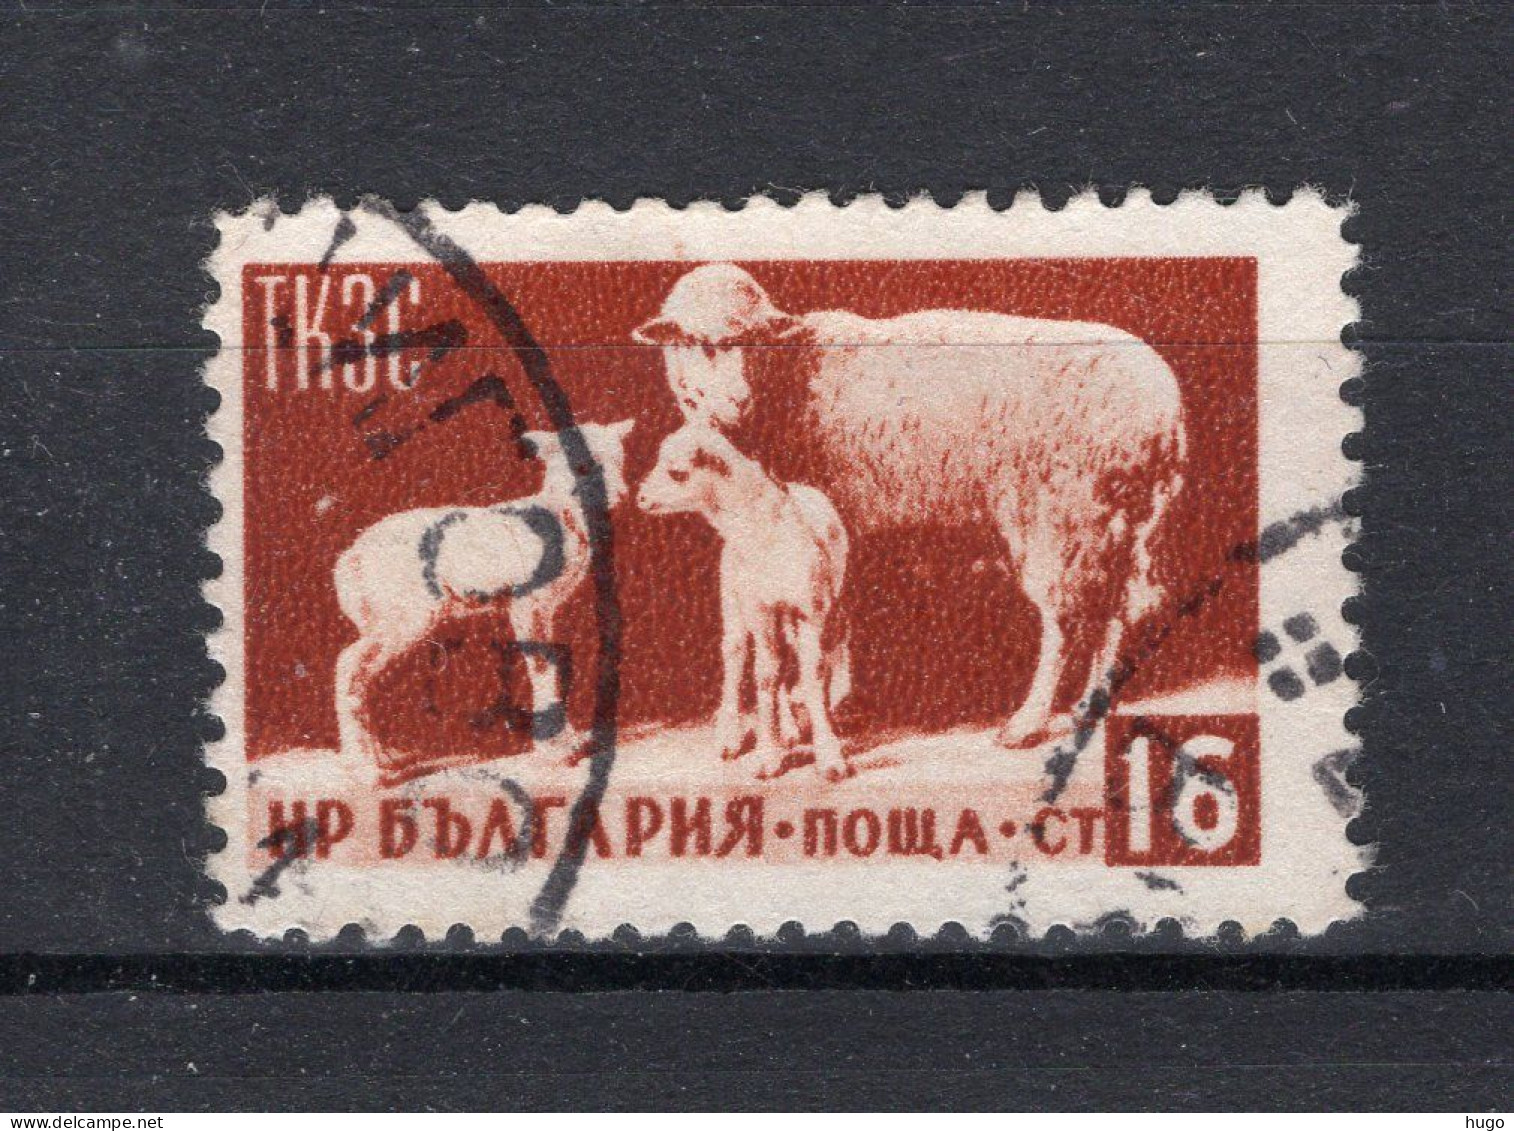 BULGARIJE Yt. 809° Gestempeld 1955 - Used Stamps